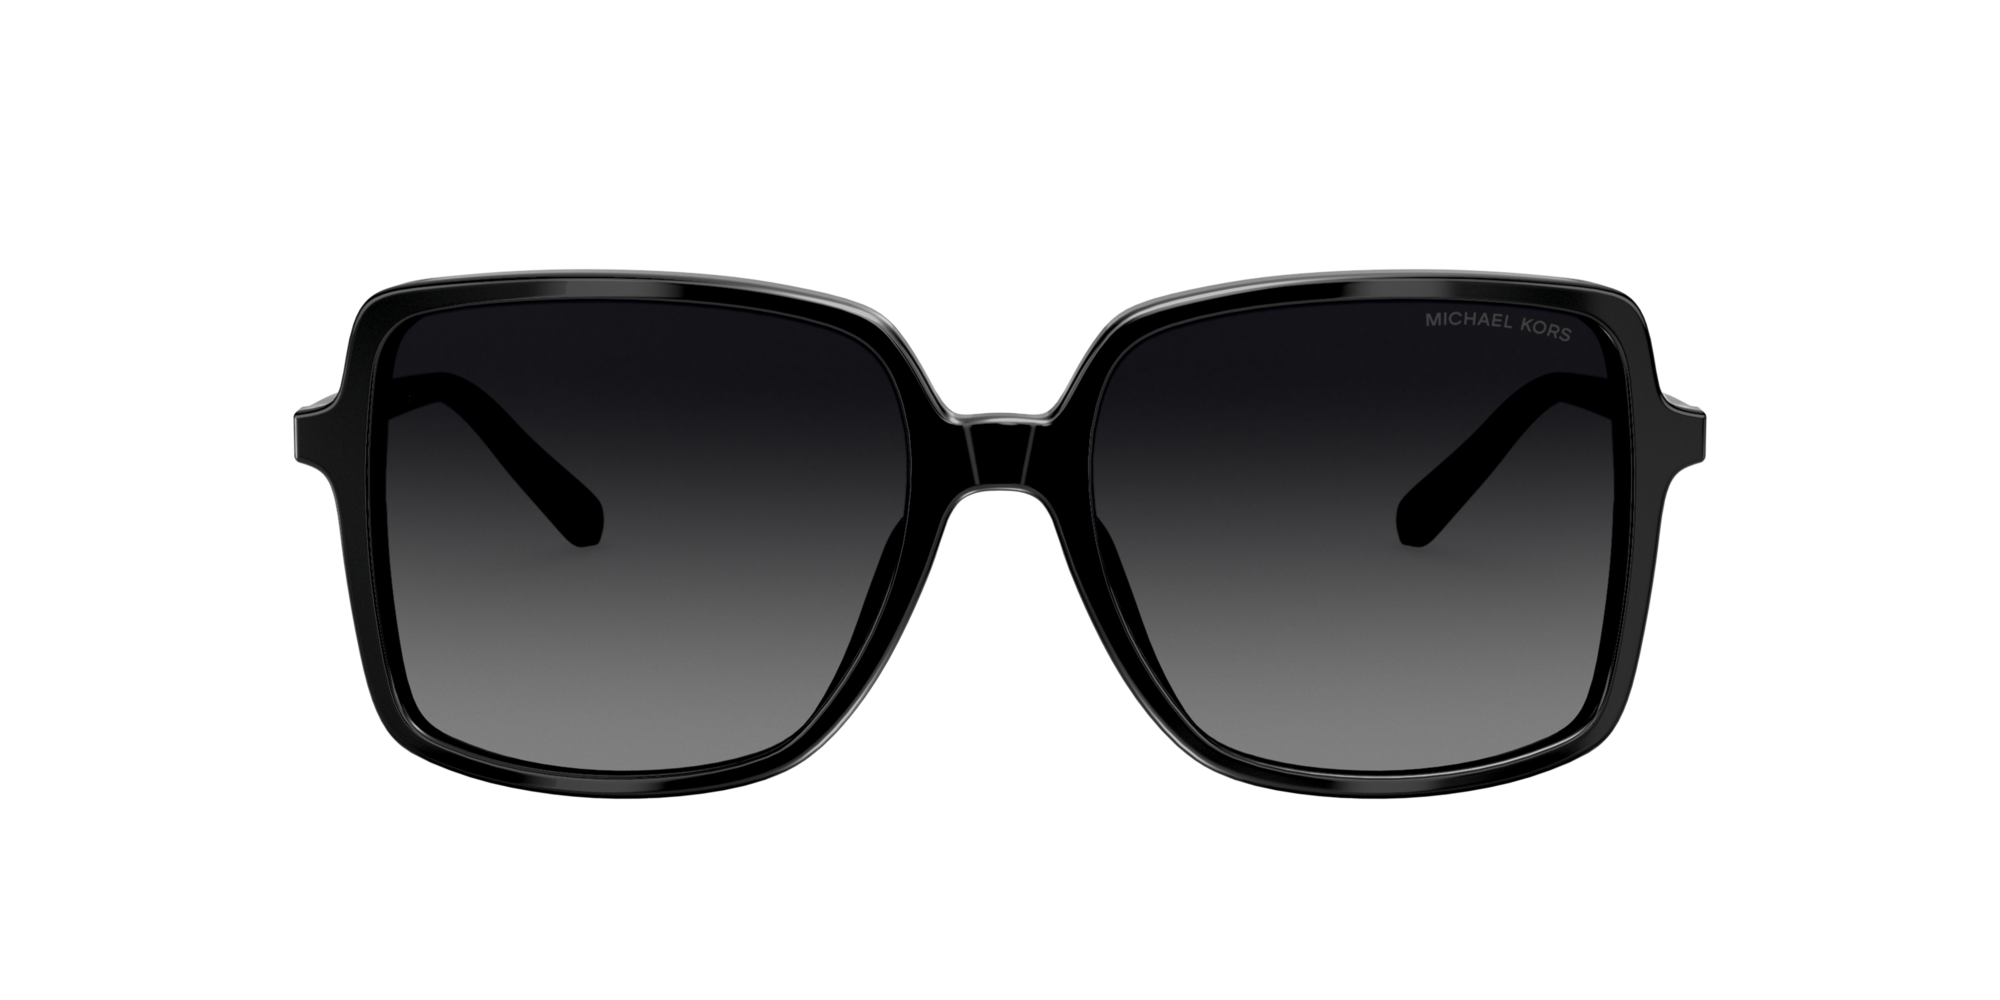 Michael Kors Sunglasses MK2098U Isle Of Palms 378113  Best Price and  Available as Prescription Sunglasses